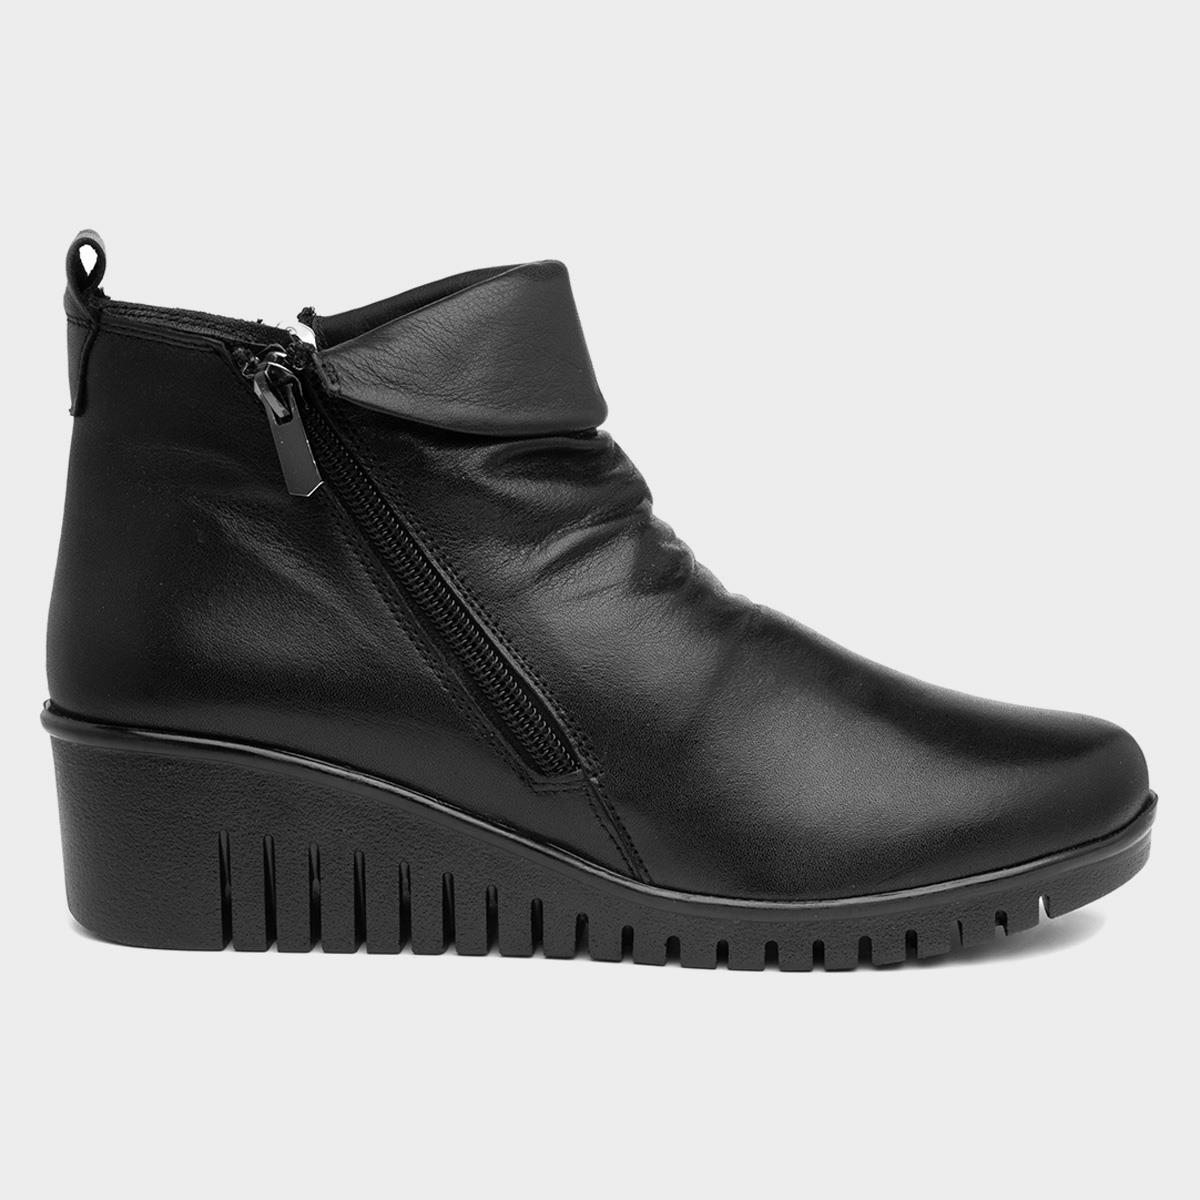 Lotus Cordelia Womens Black Leather Wedge Boot-185089 | Shoe Zone